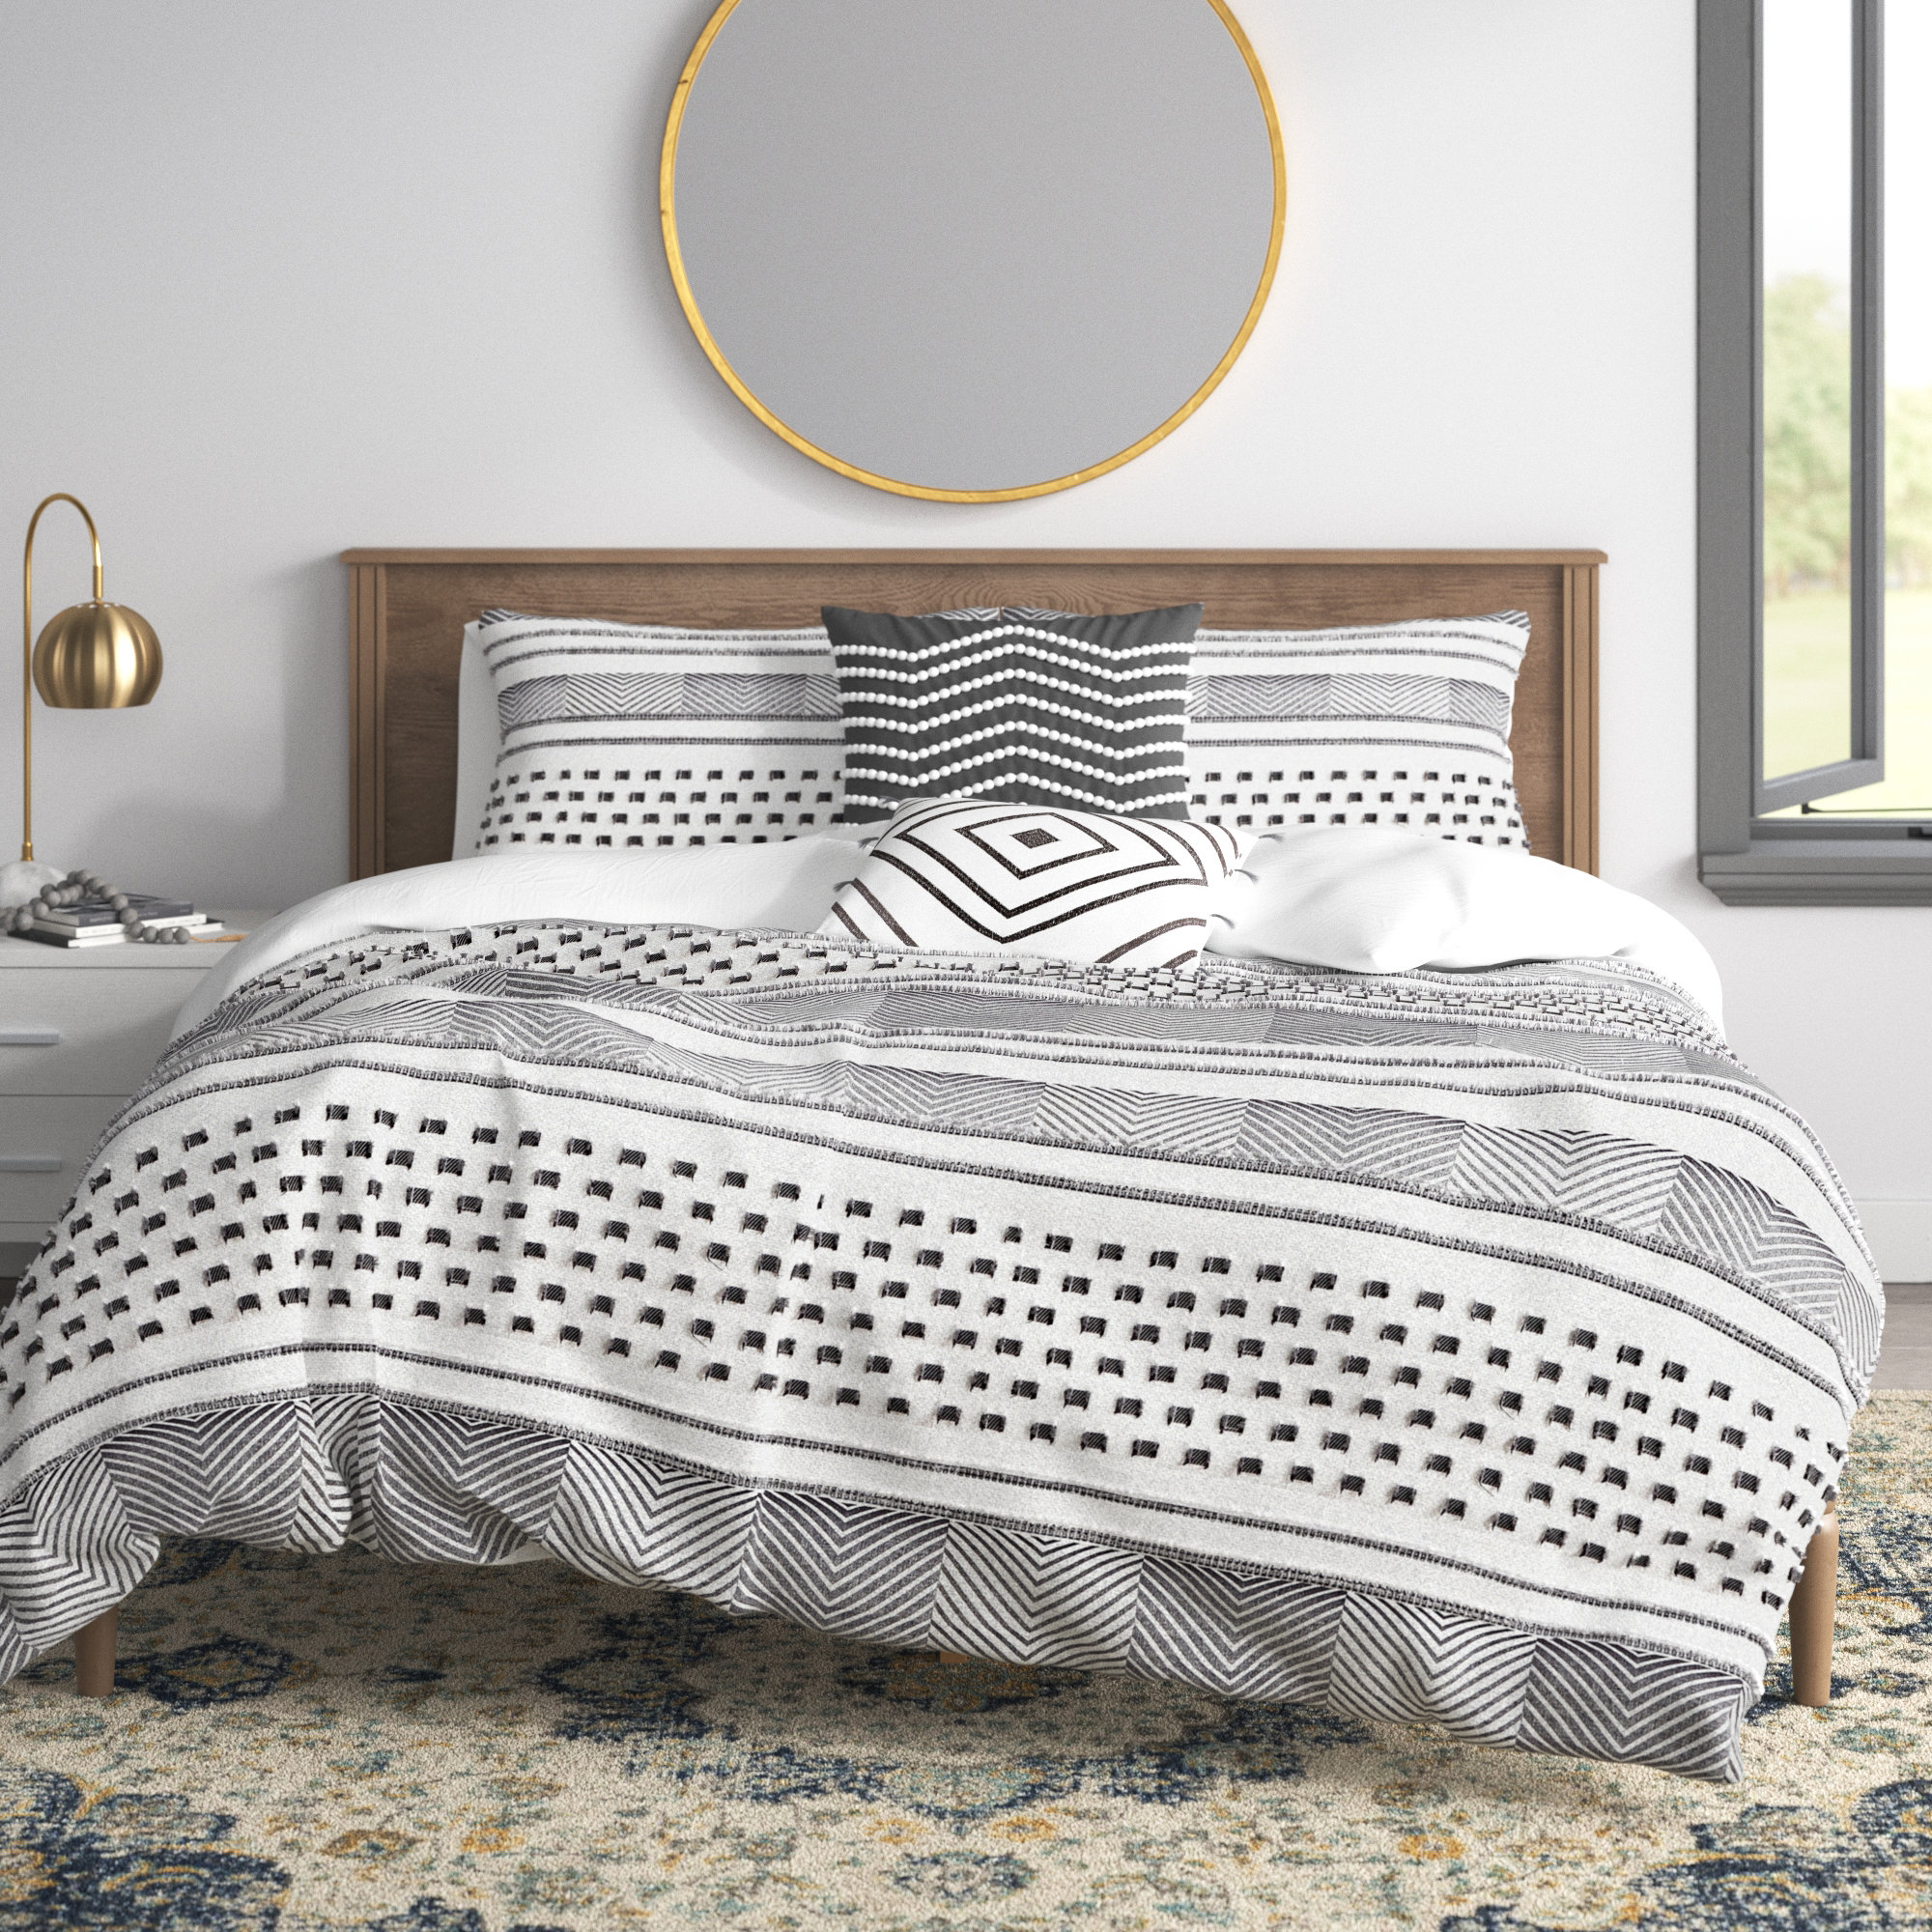 Reversible Comforter Set 5 Piece Black/Light Grey Lightweight Bedspread, Shop Today. Get it Tomorrow!